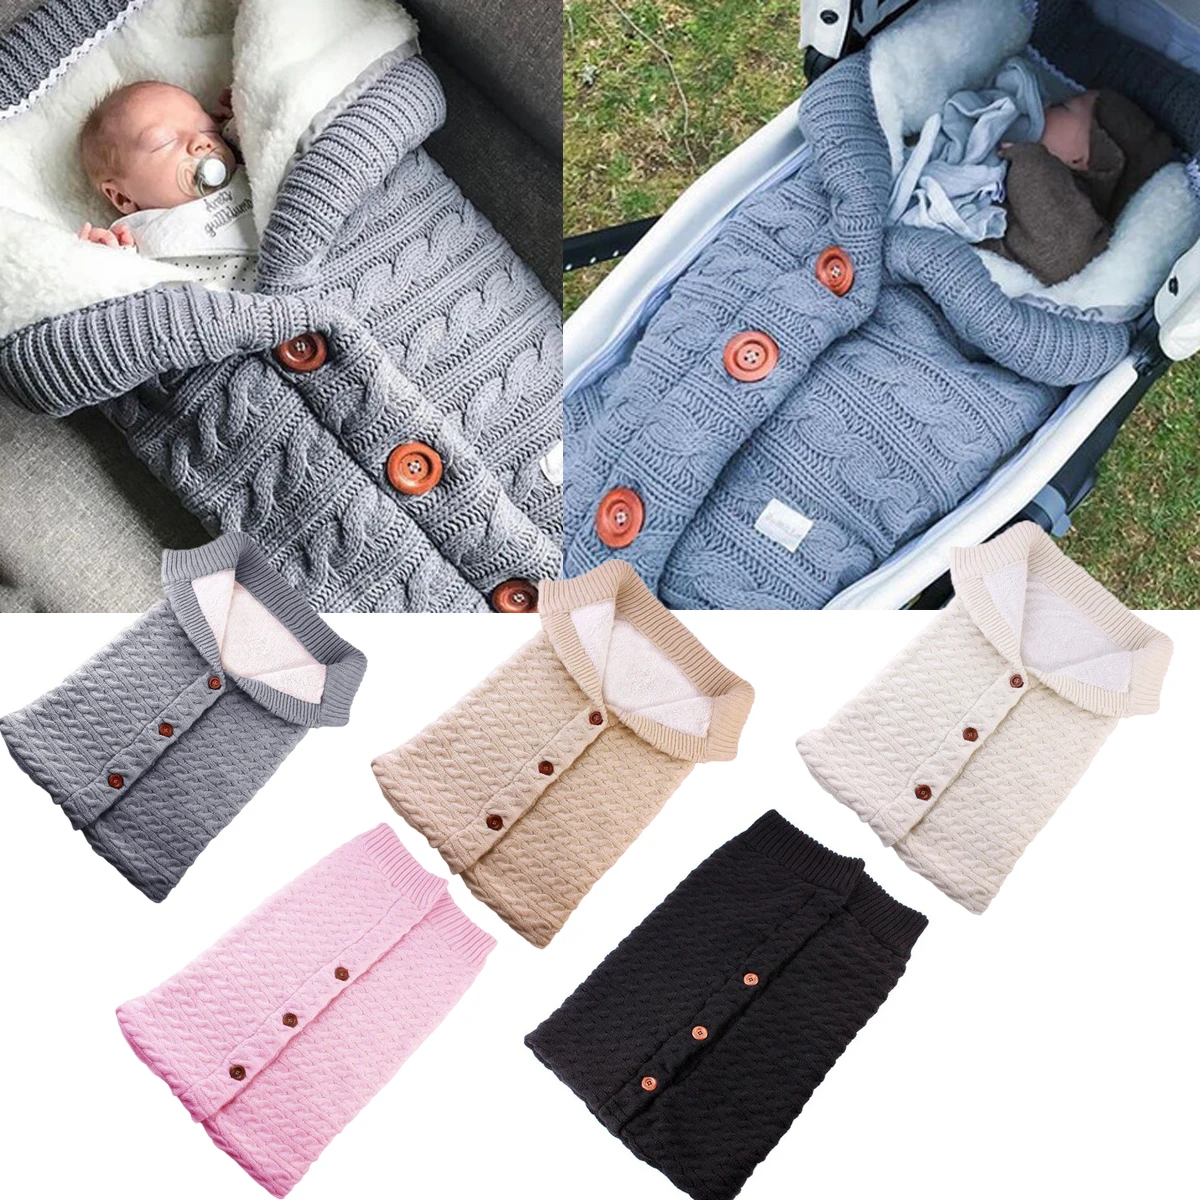 Newborn Baby Infant Cable Knit Blanket Swaddle Wrap Swaddling Sleeping Bag Warm 